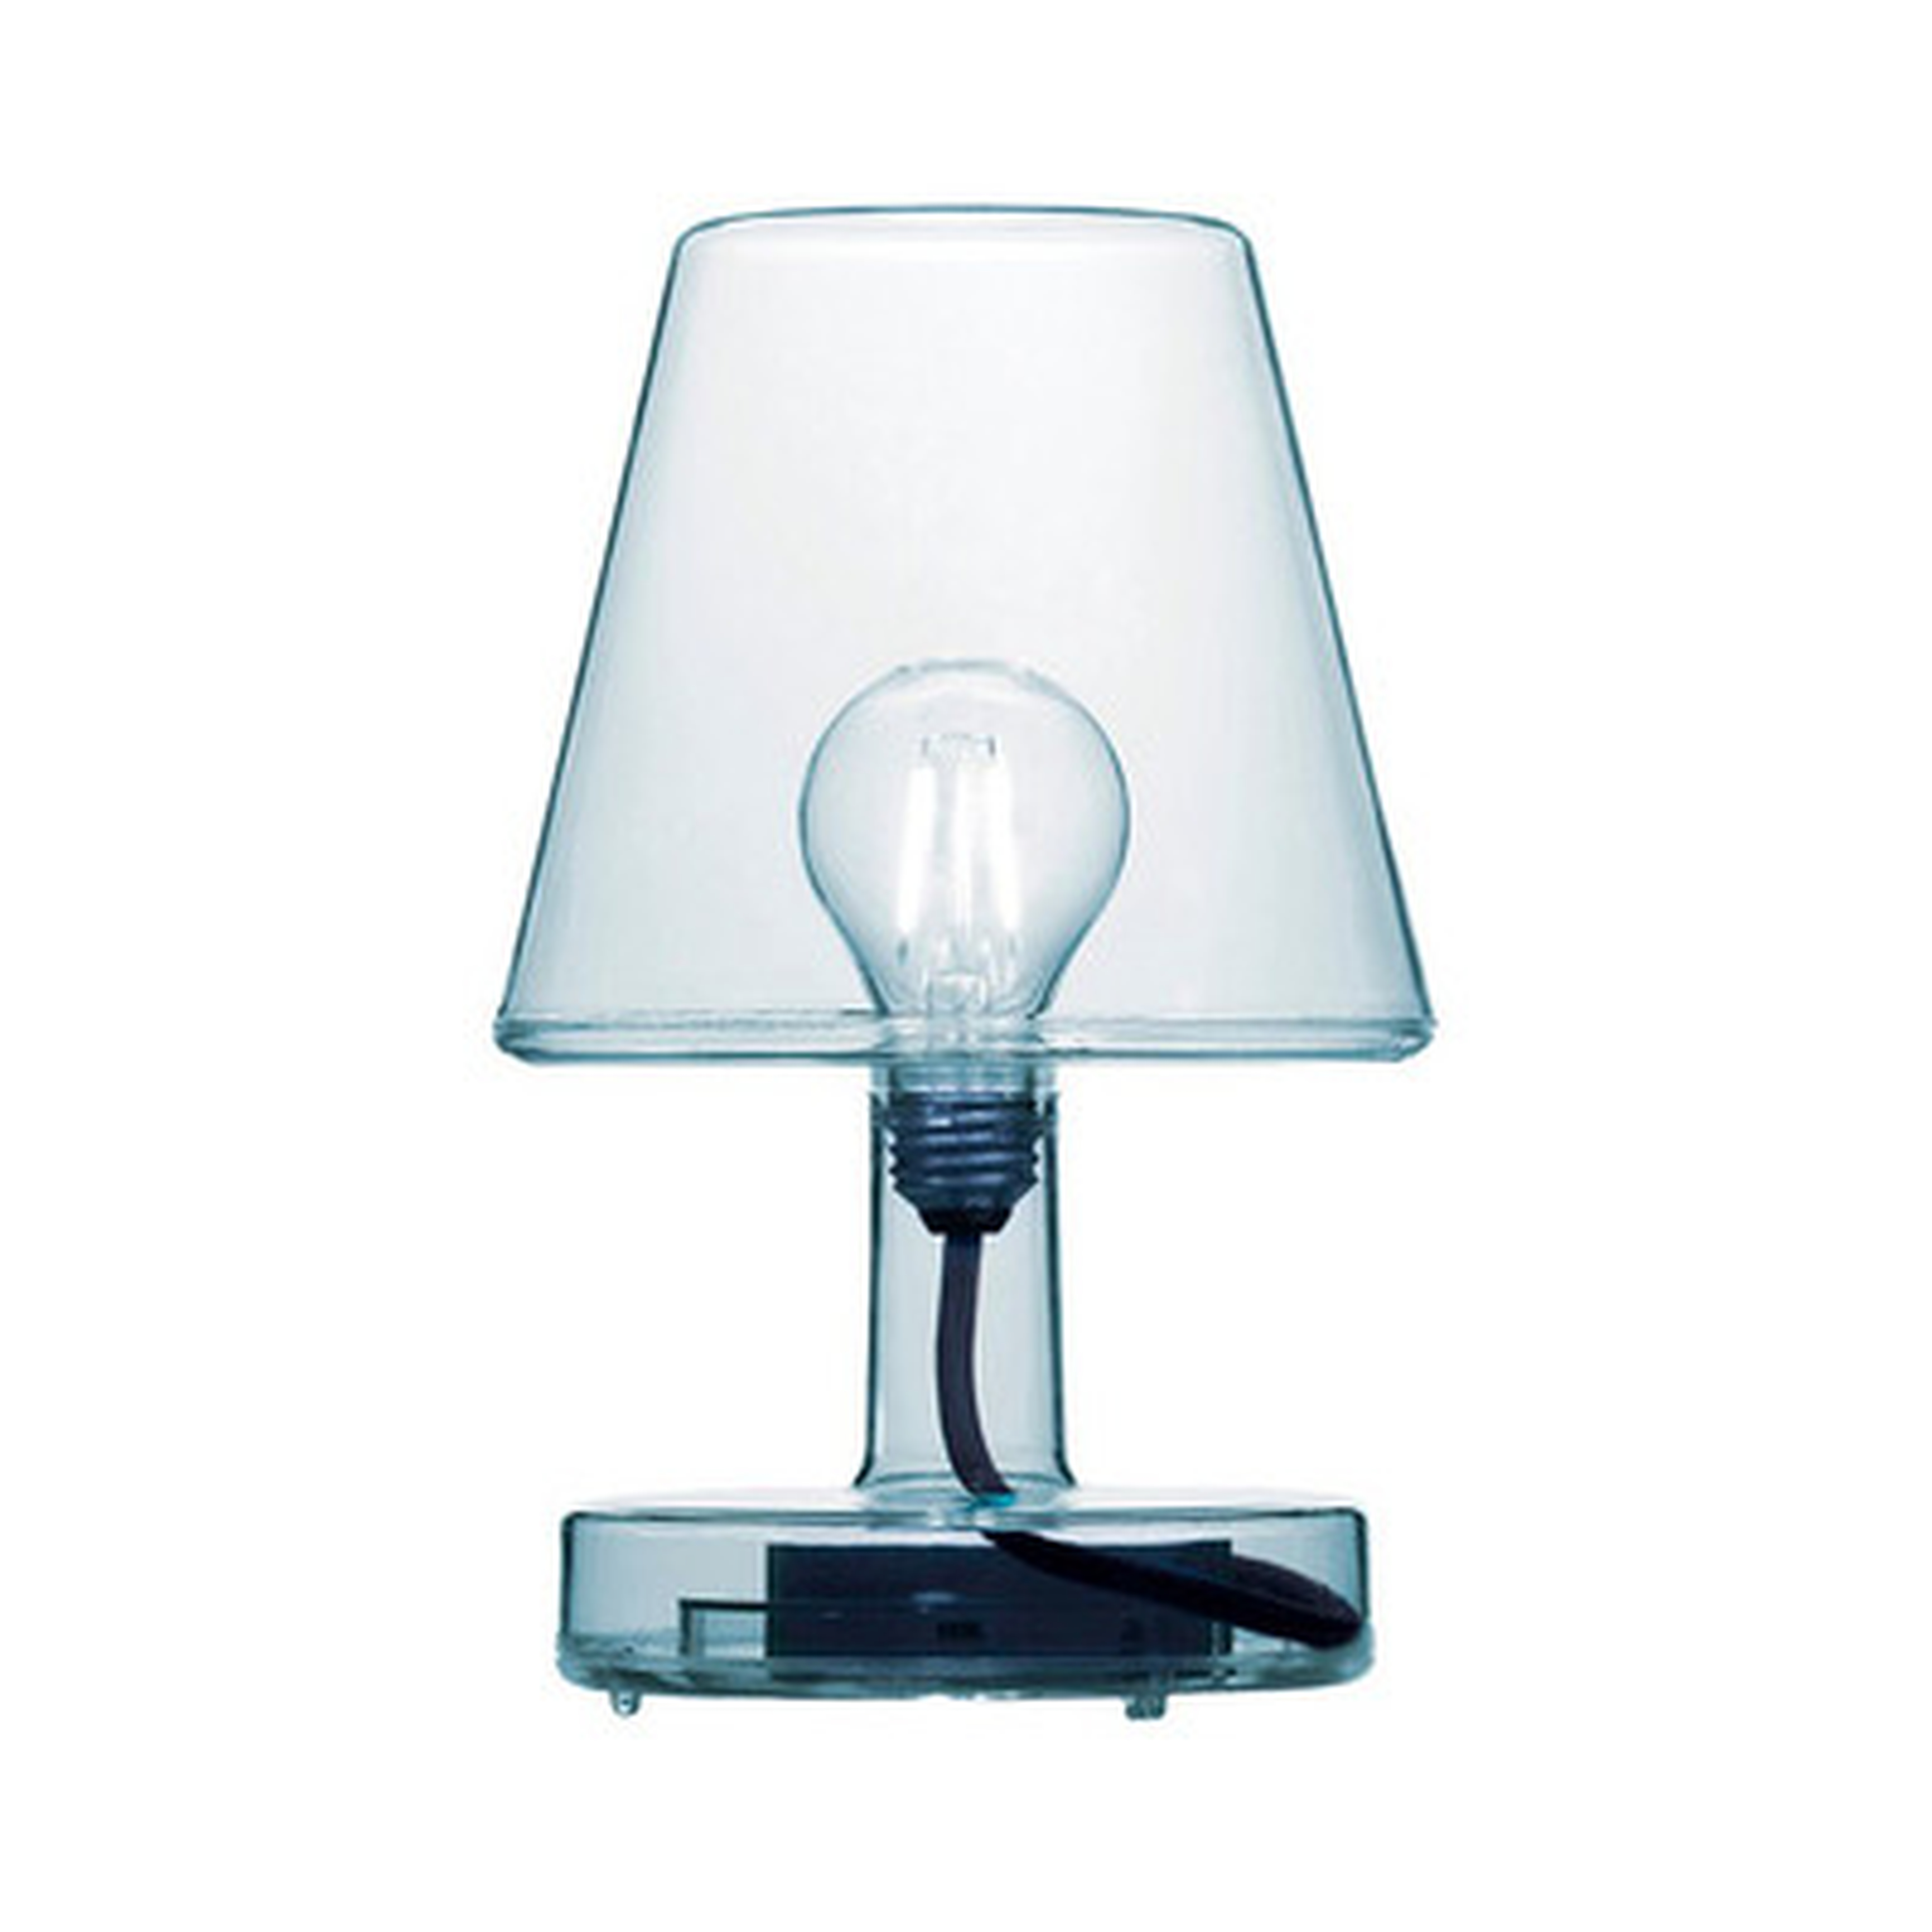 Transloetje 10" Bedside Table Lamp - AllModern